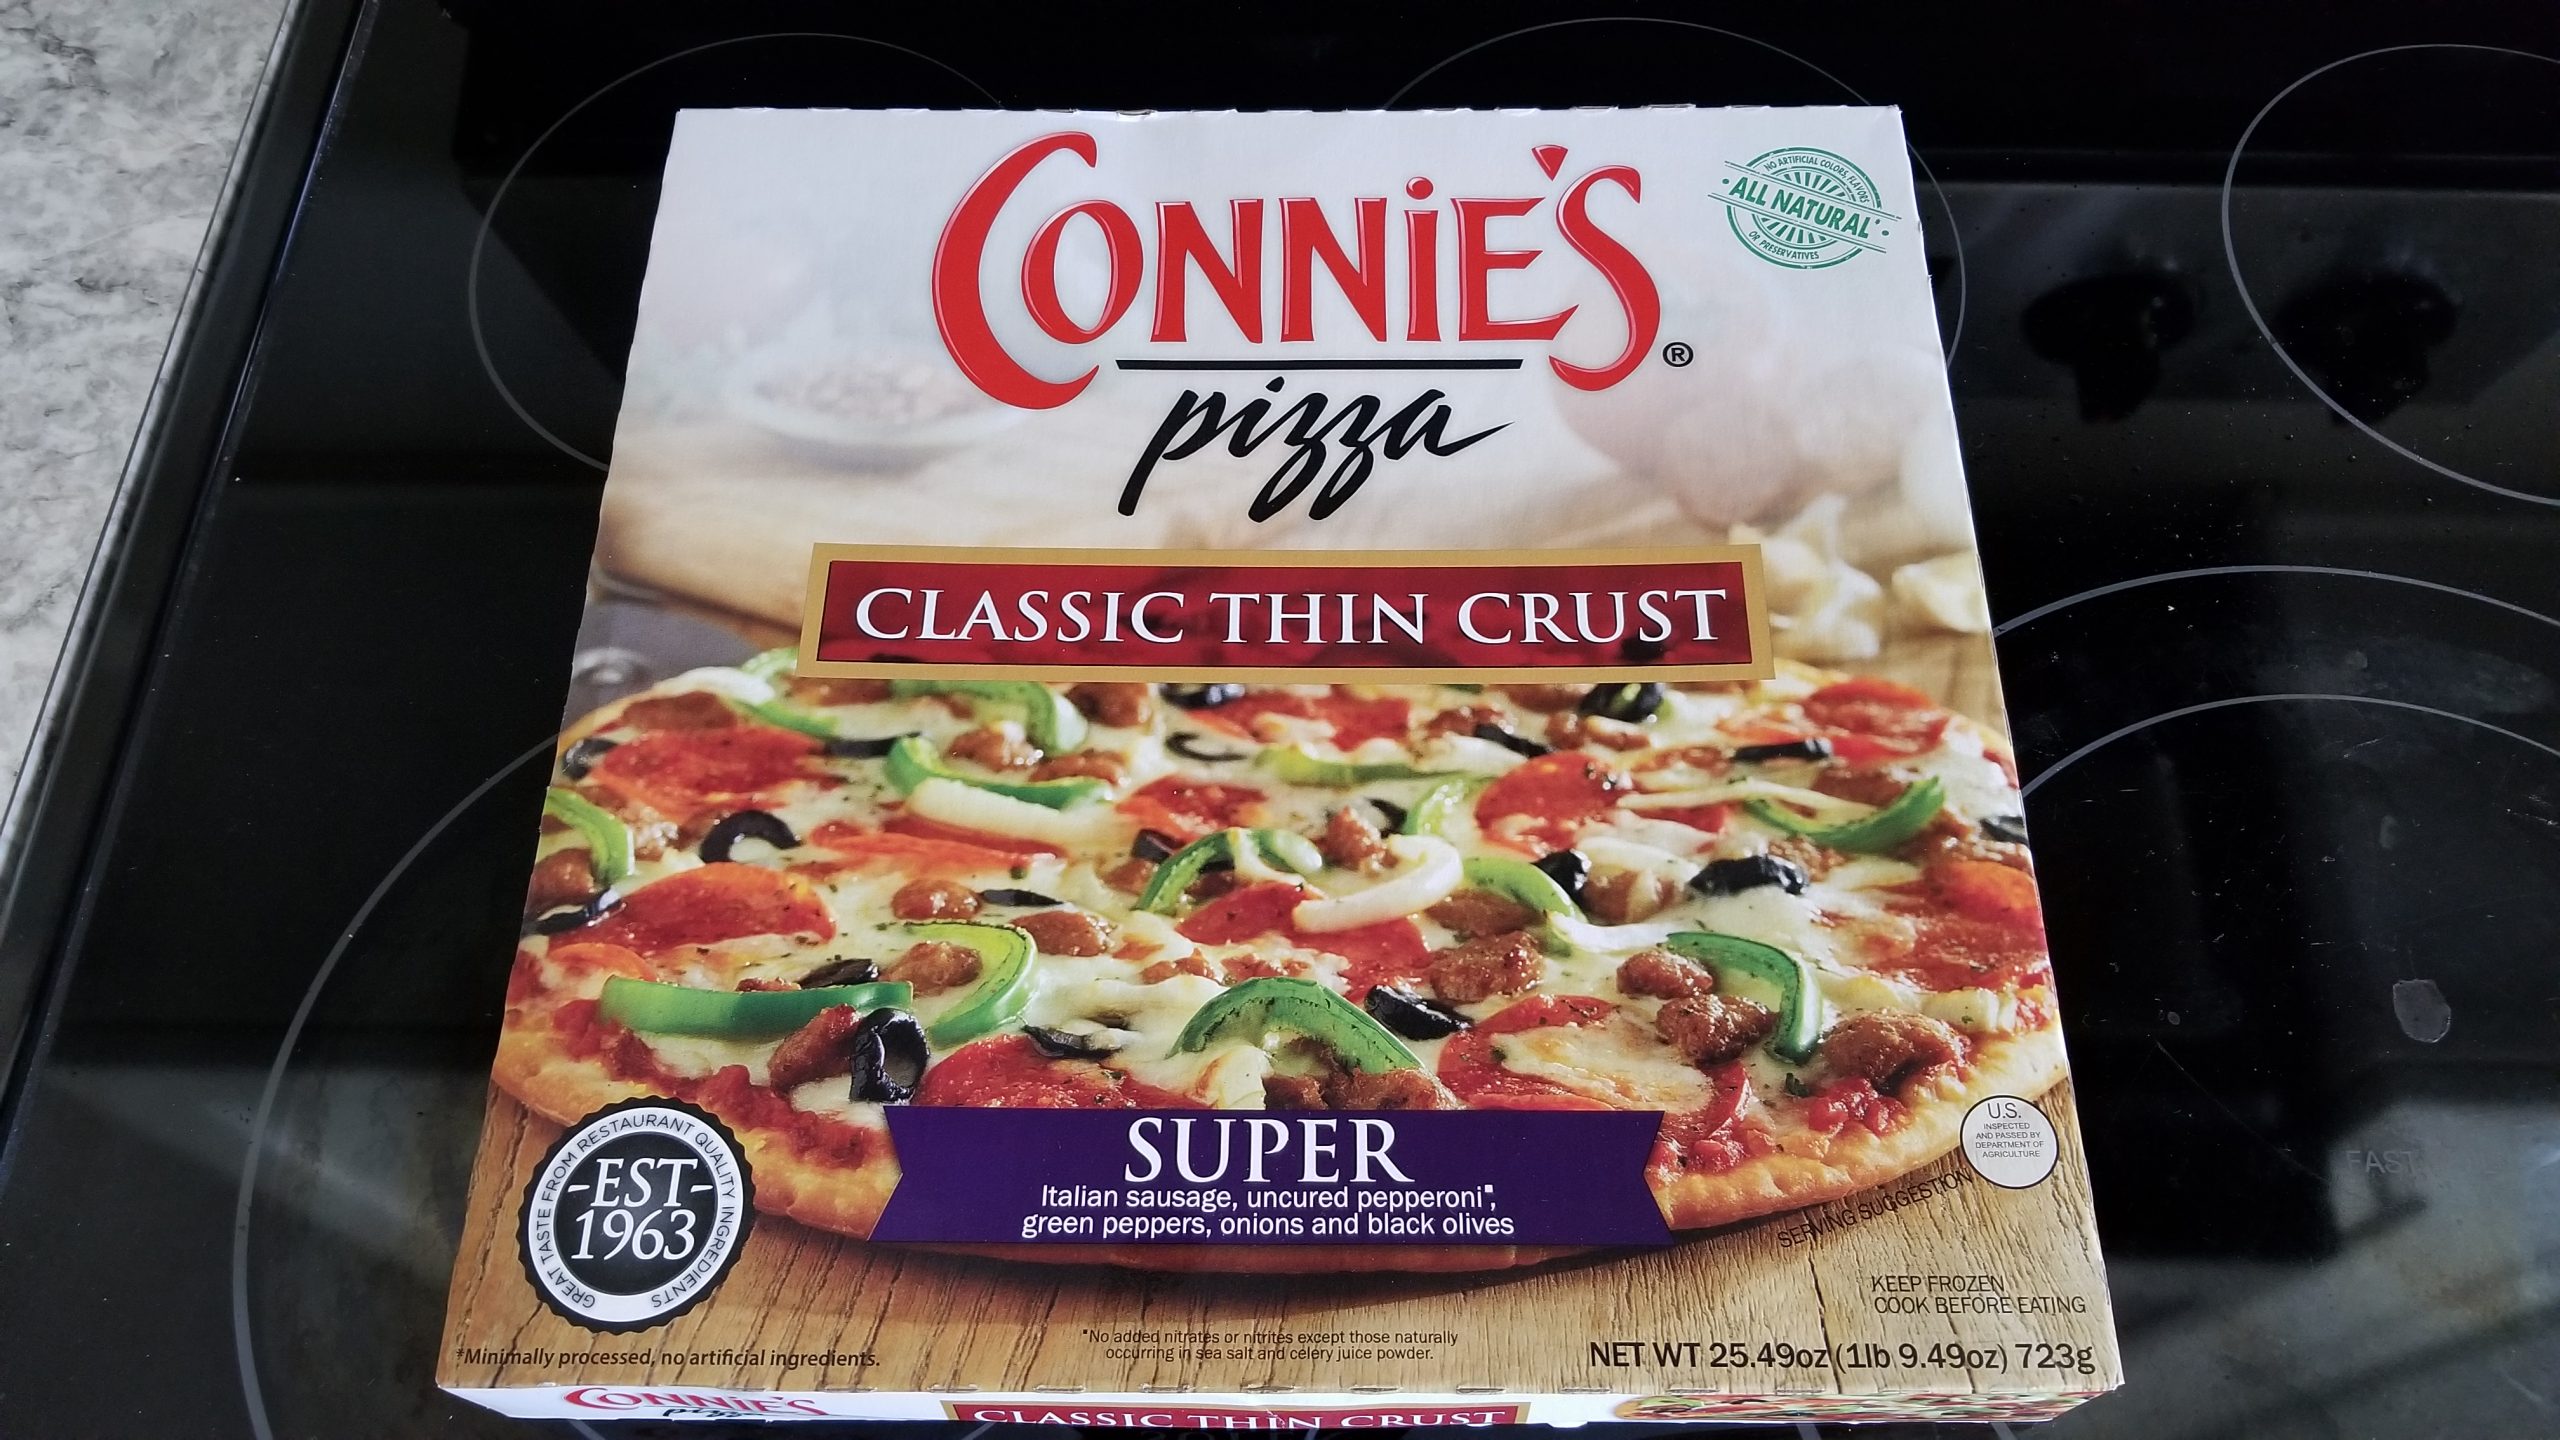 Connie's classic thin-crust pizza